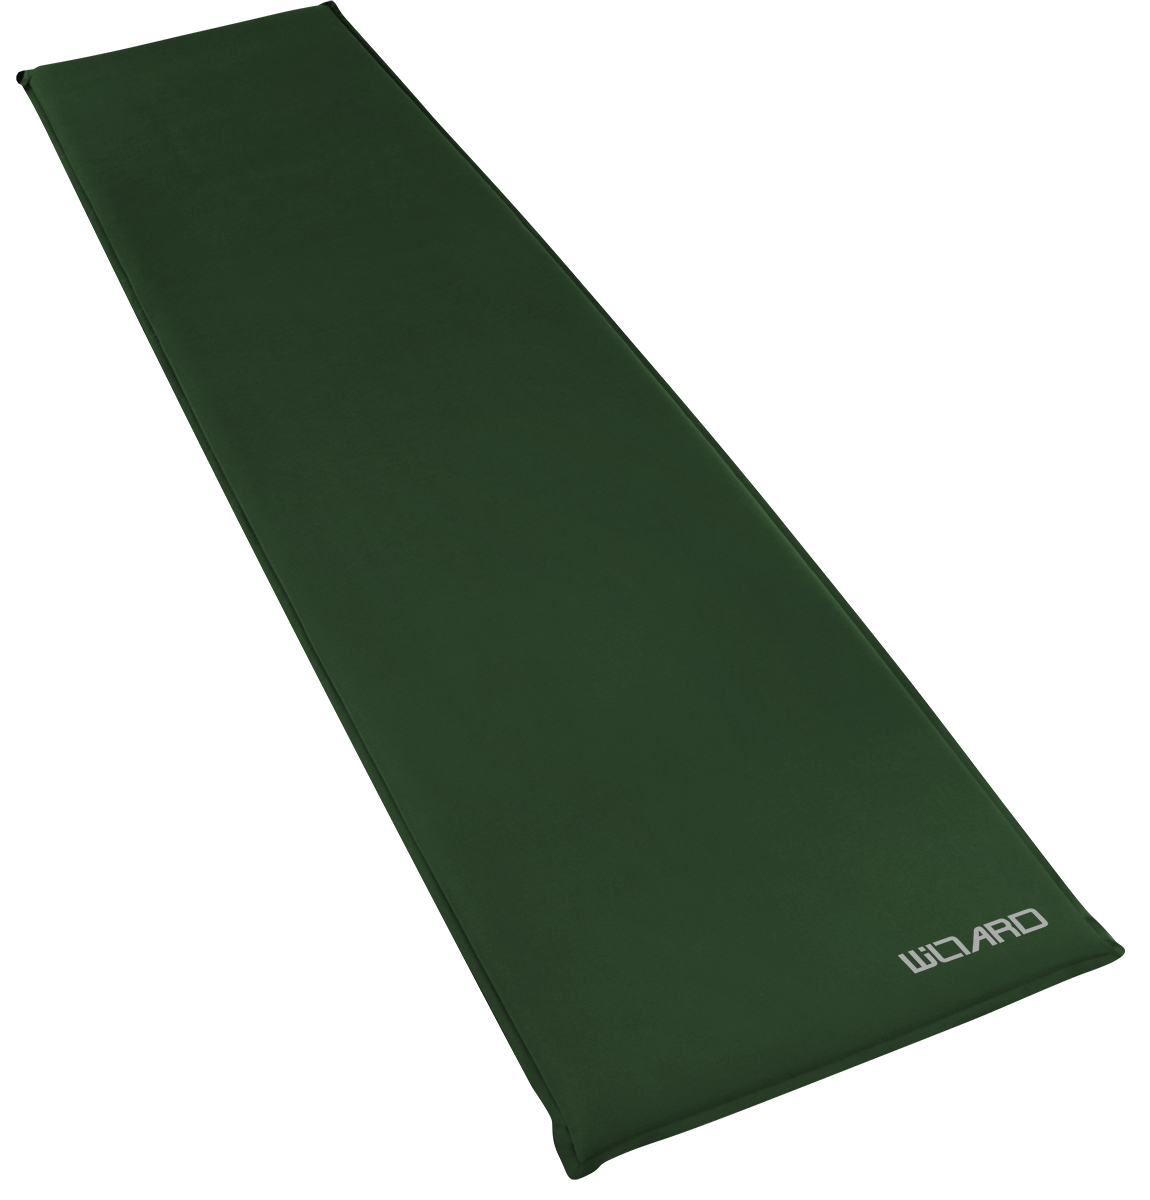 COMFORT - Self-inflating mat